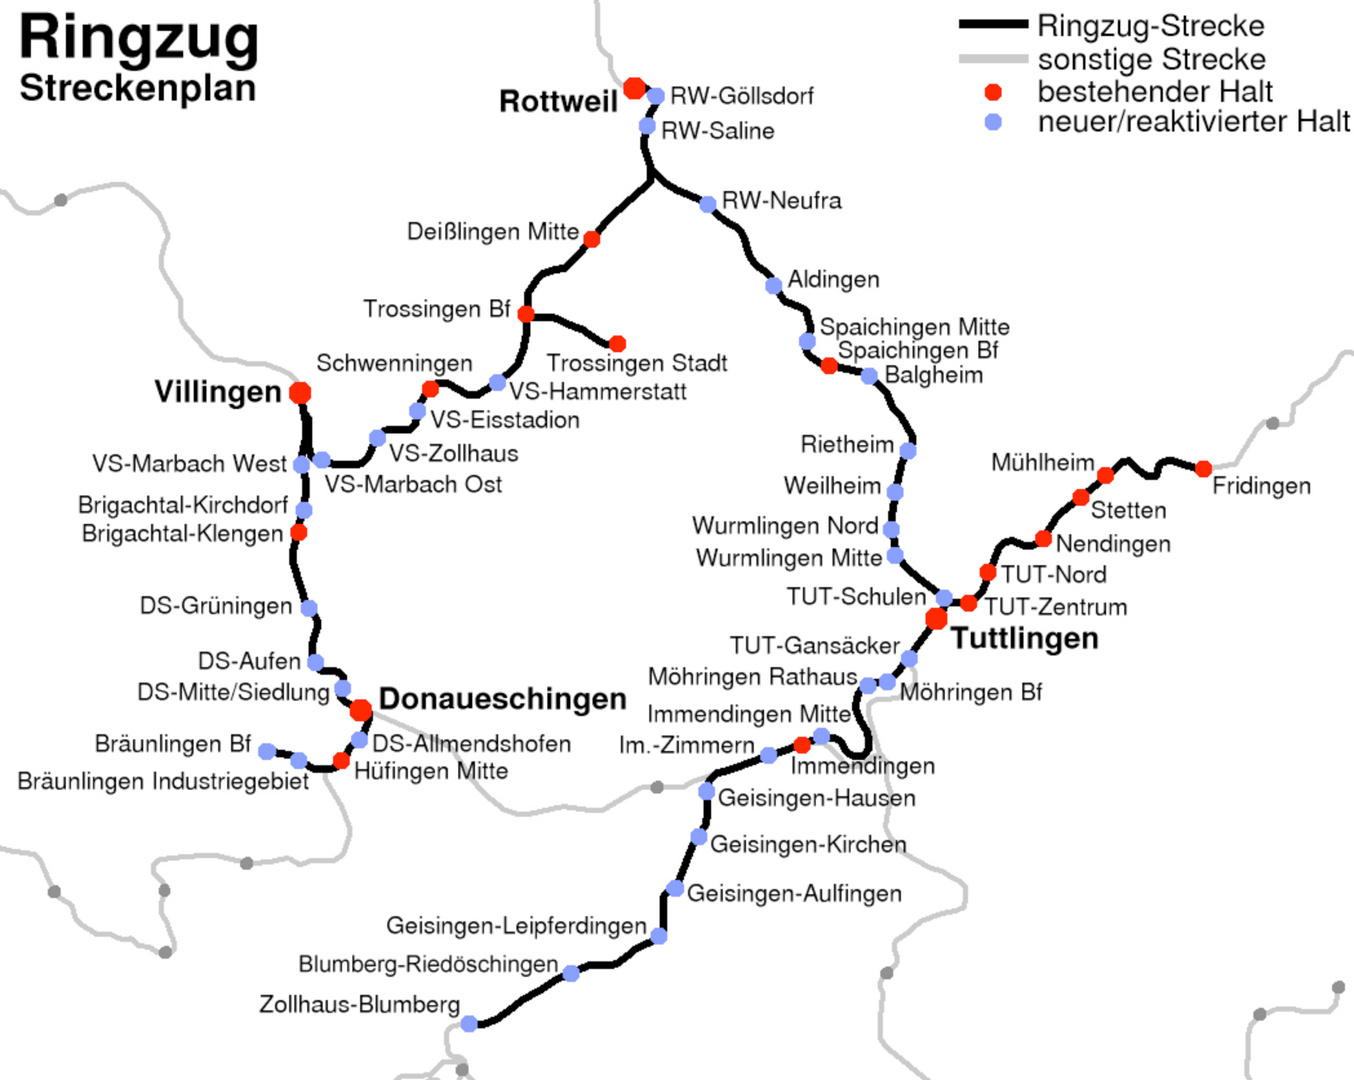 Ringzug-Strecken